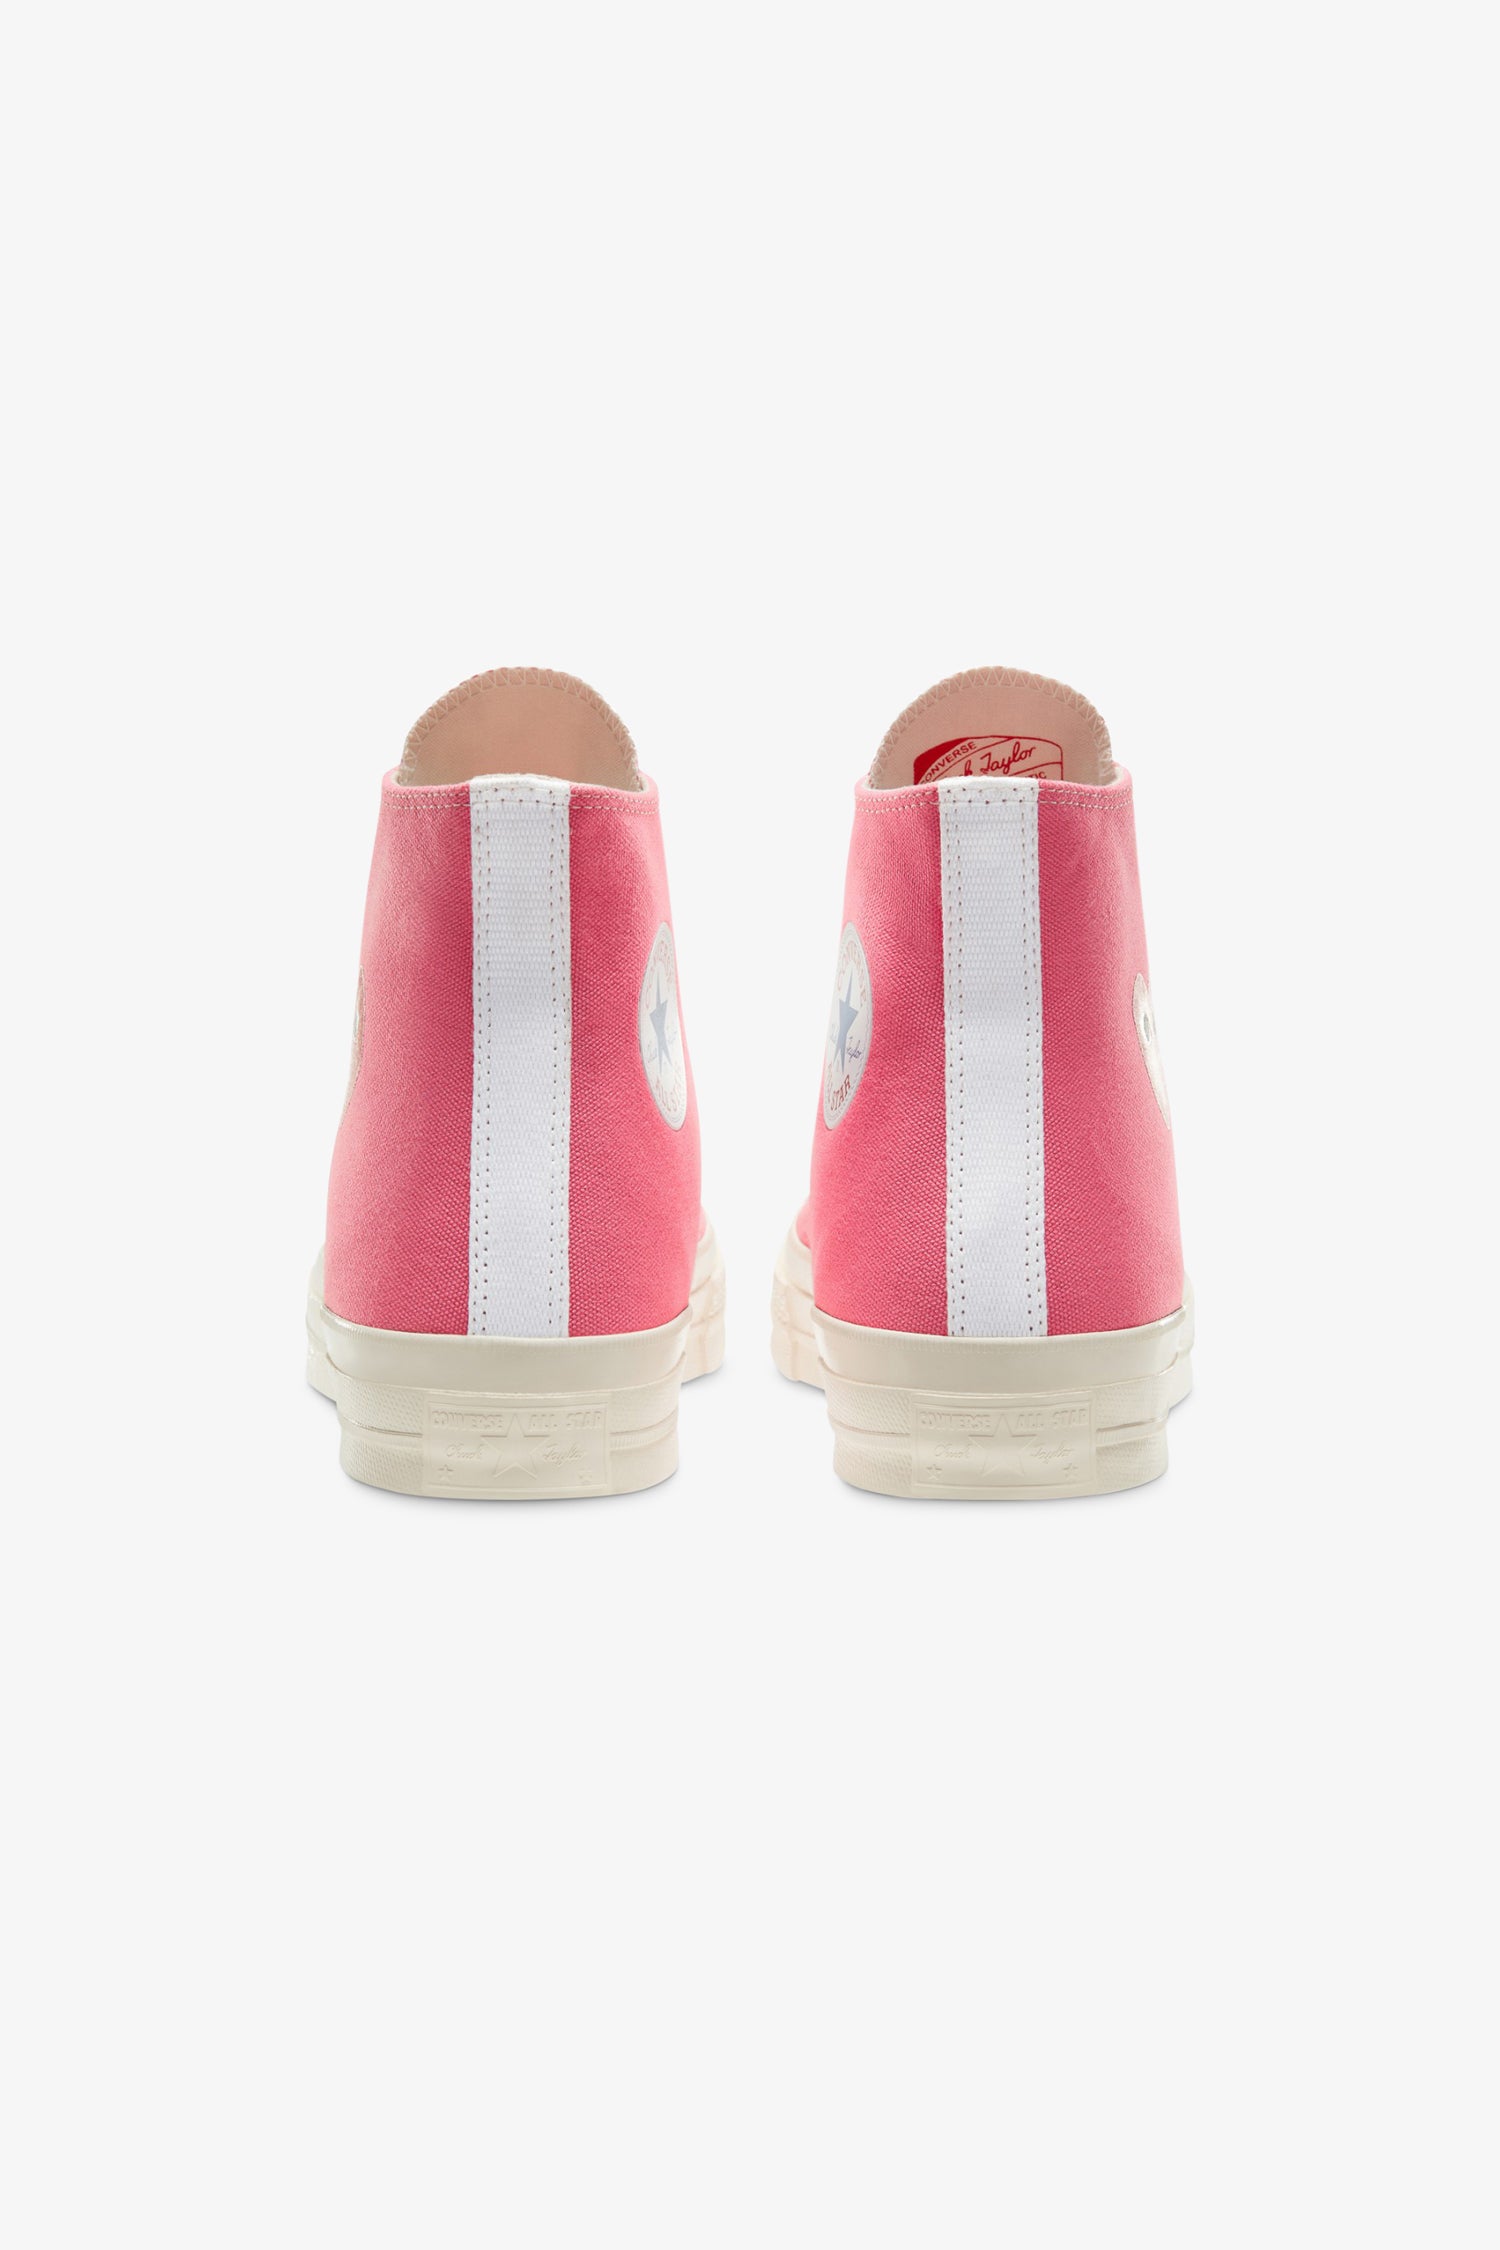 Selectshop FRAME - COMME DES GARCONS PLAY(MOE) Play Comme des Garçons x Converse Chuck '70 High (Bright Pink)(MOE) Footwear Dubai